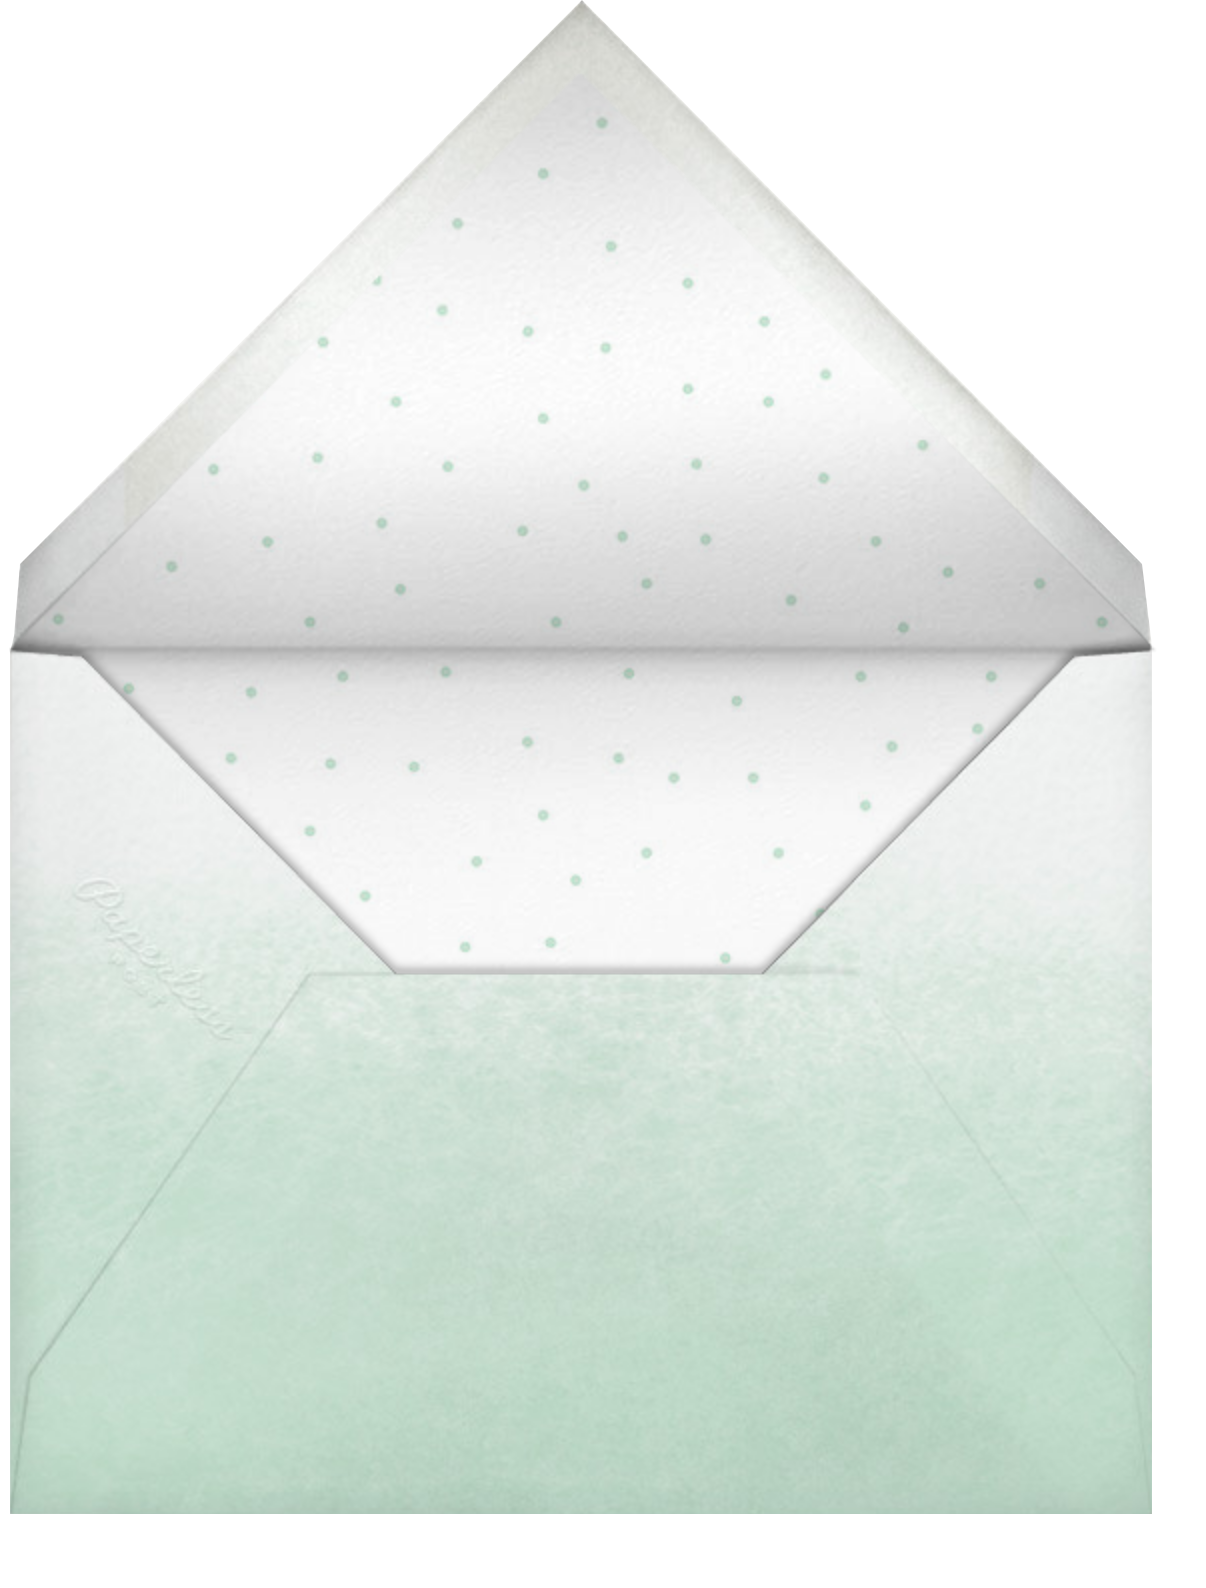 Bunny Bunnies - Paperless Post - Envelope